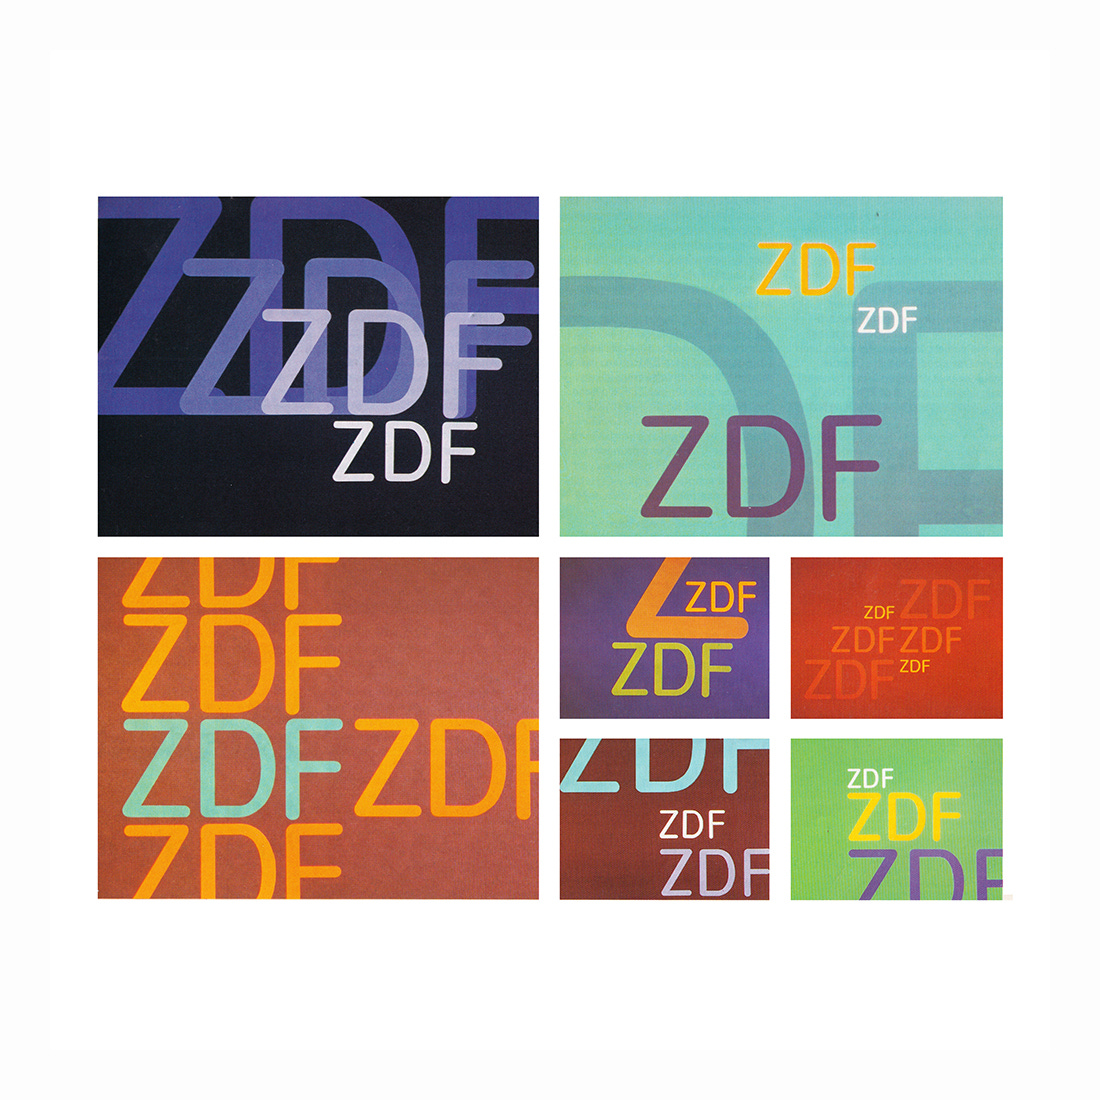 Otl Aicher's 1973 corporate identity for German television ZDF